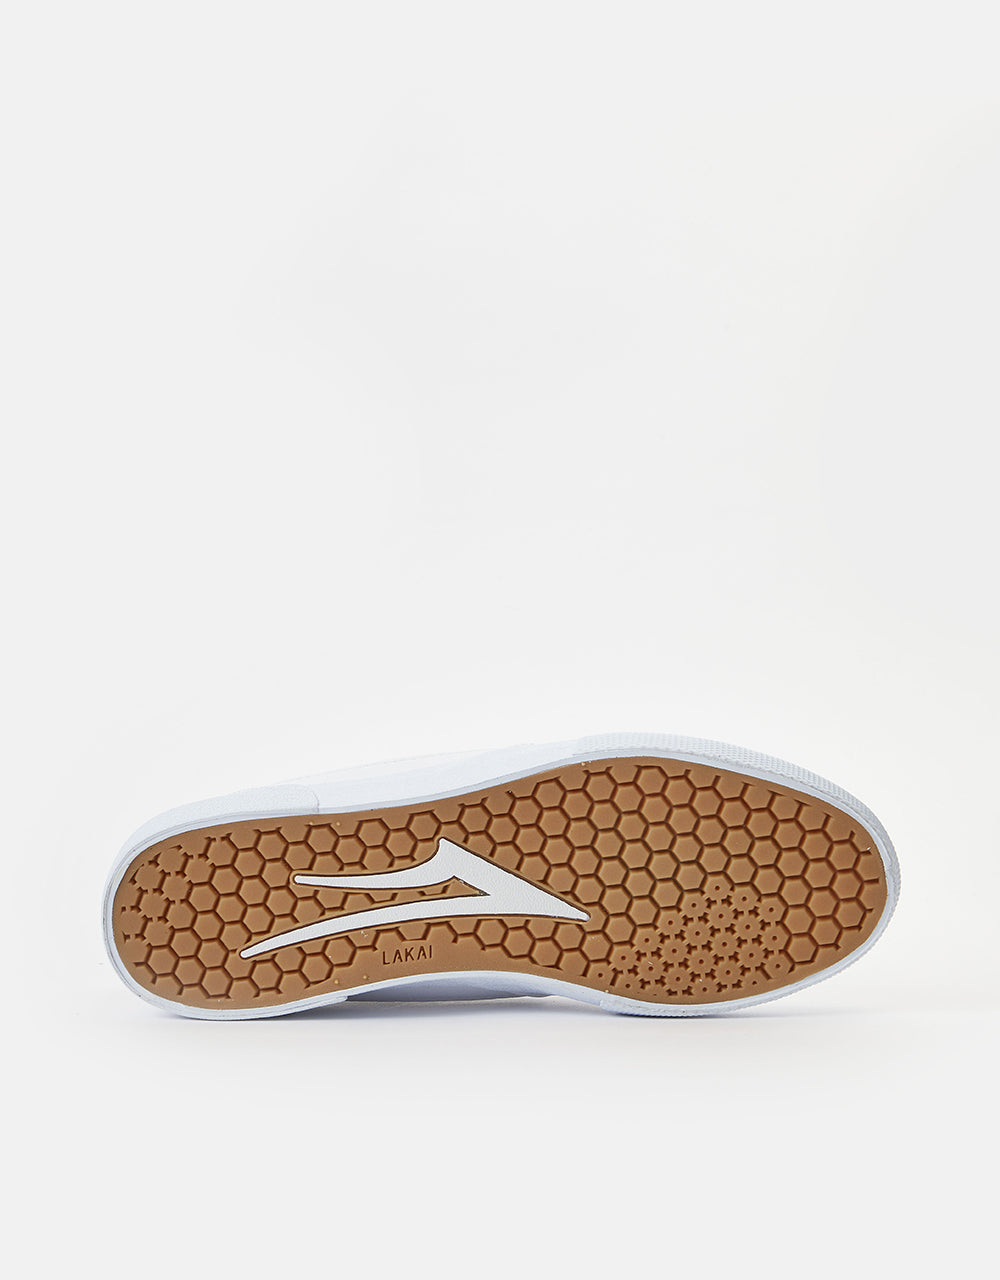 Lakai Cambridge Skate Shoes - White/Pine Leather